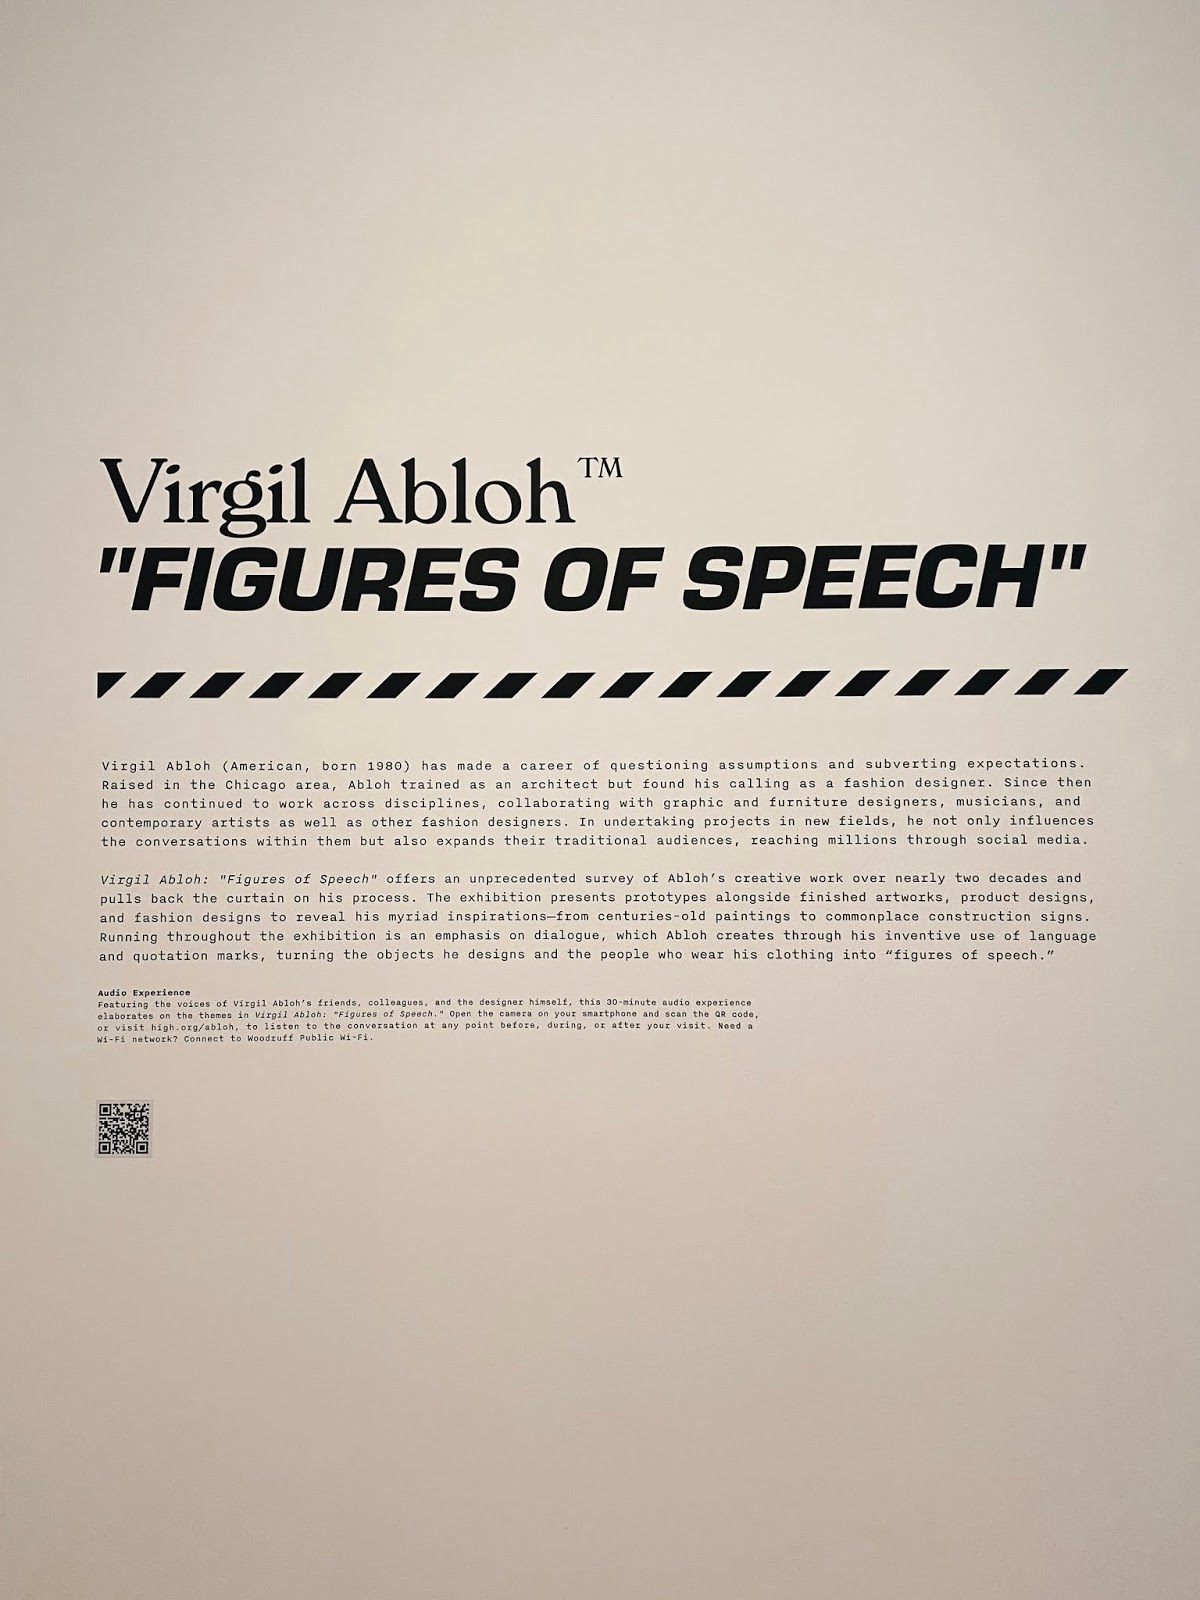 Few words about Virgil Abloh — Steemit